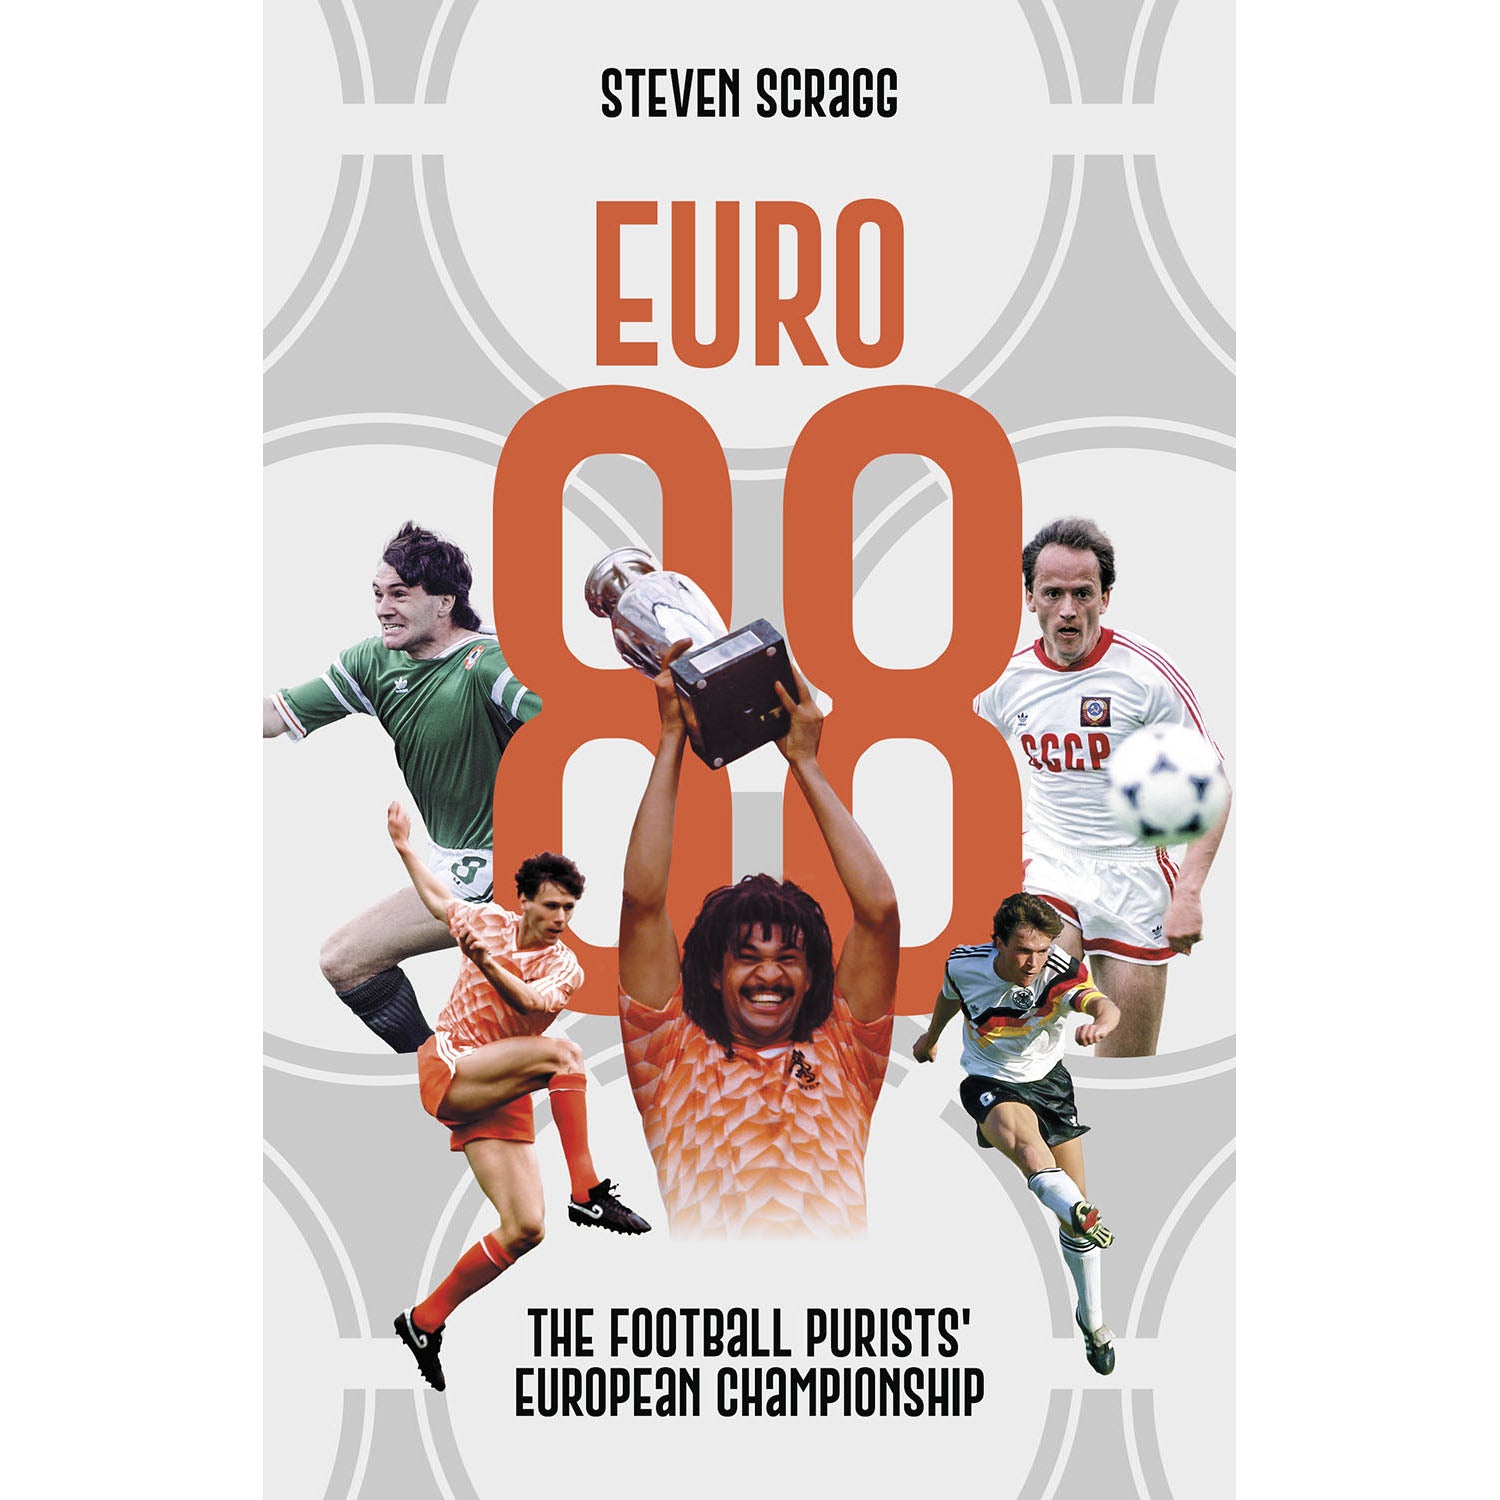 Euro 88 – The Football Purists' European Championship